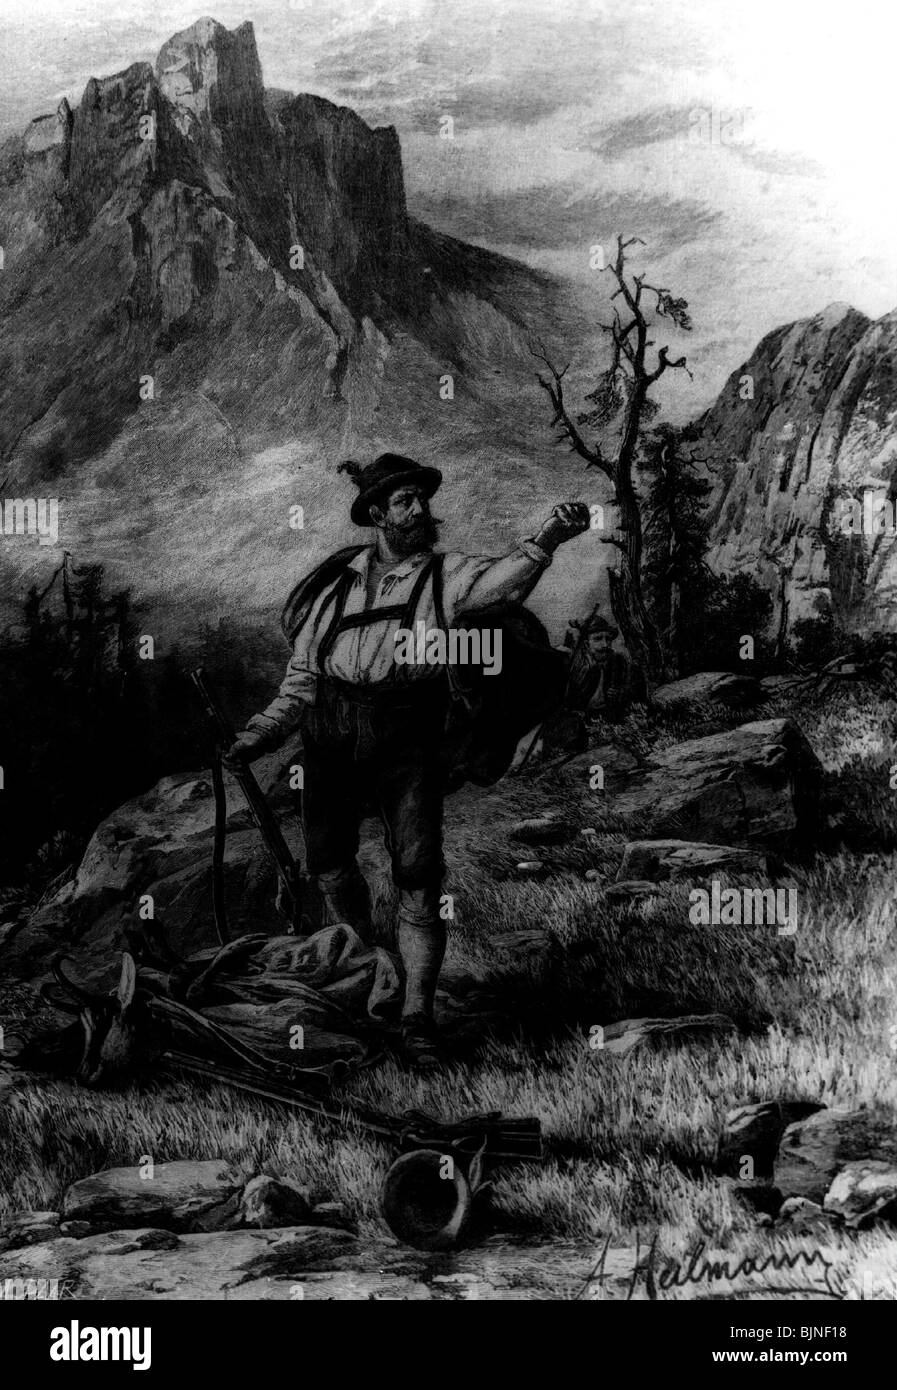 hunting, poachers, 'Stolen Prey', wood engraving based on drawing by Anton Heilmann, 'Illustrierte Welt', 1891, Stock Photo